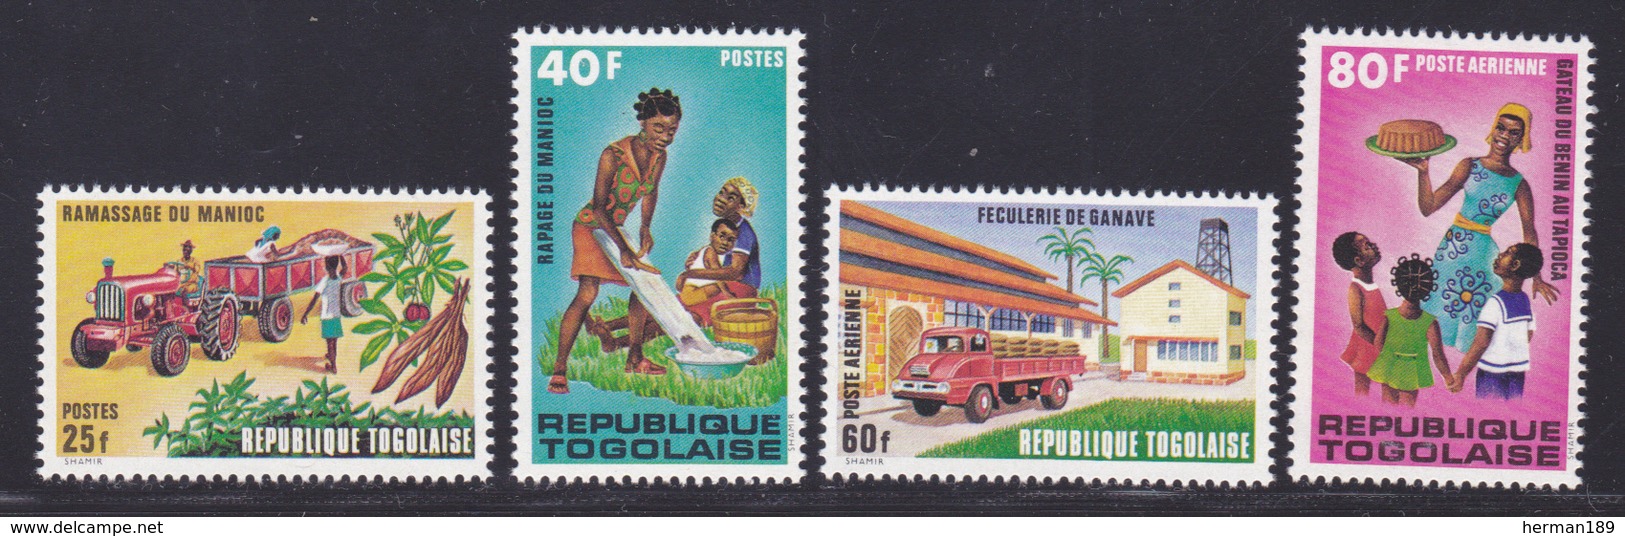 TOGO N°  744 & 745, AERIENS N° 178 1 179 ** MNH Neufs Sans Charnière, TB (D7331) Industrie Du Manioc - Togo (1960-...)